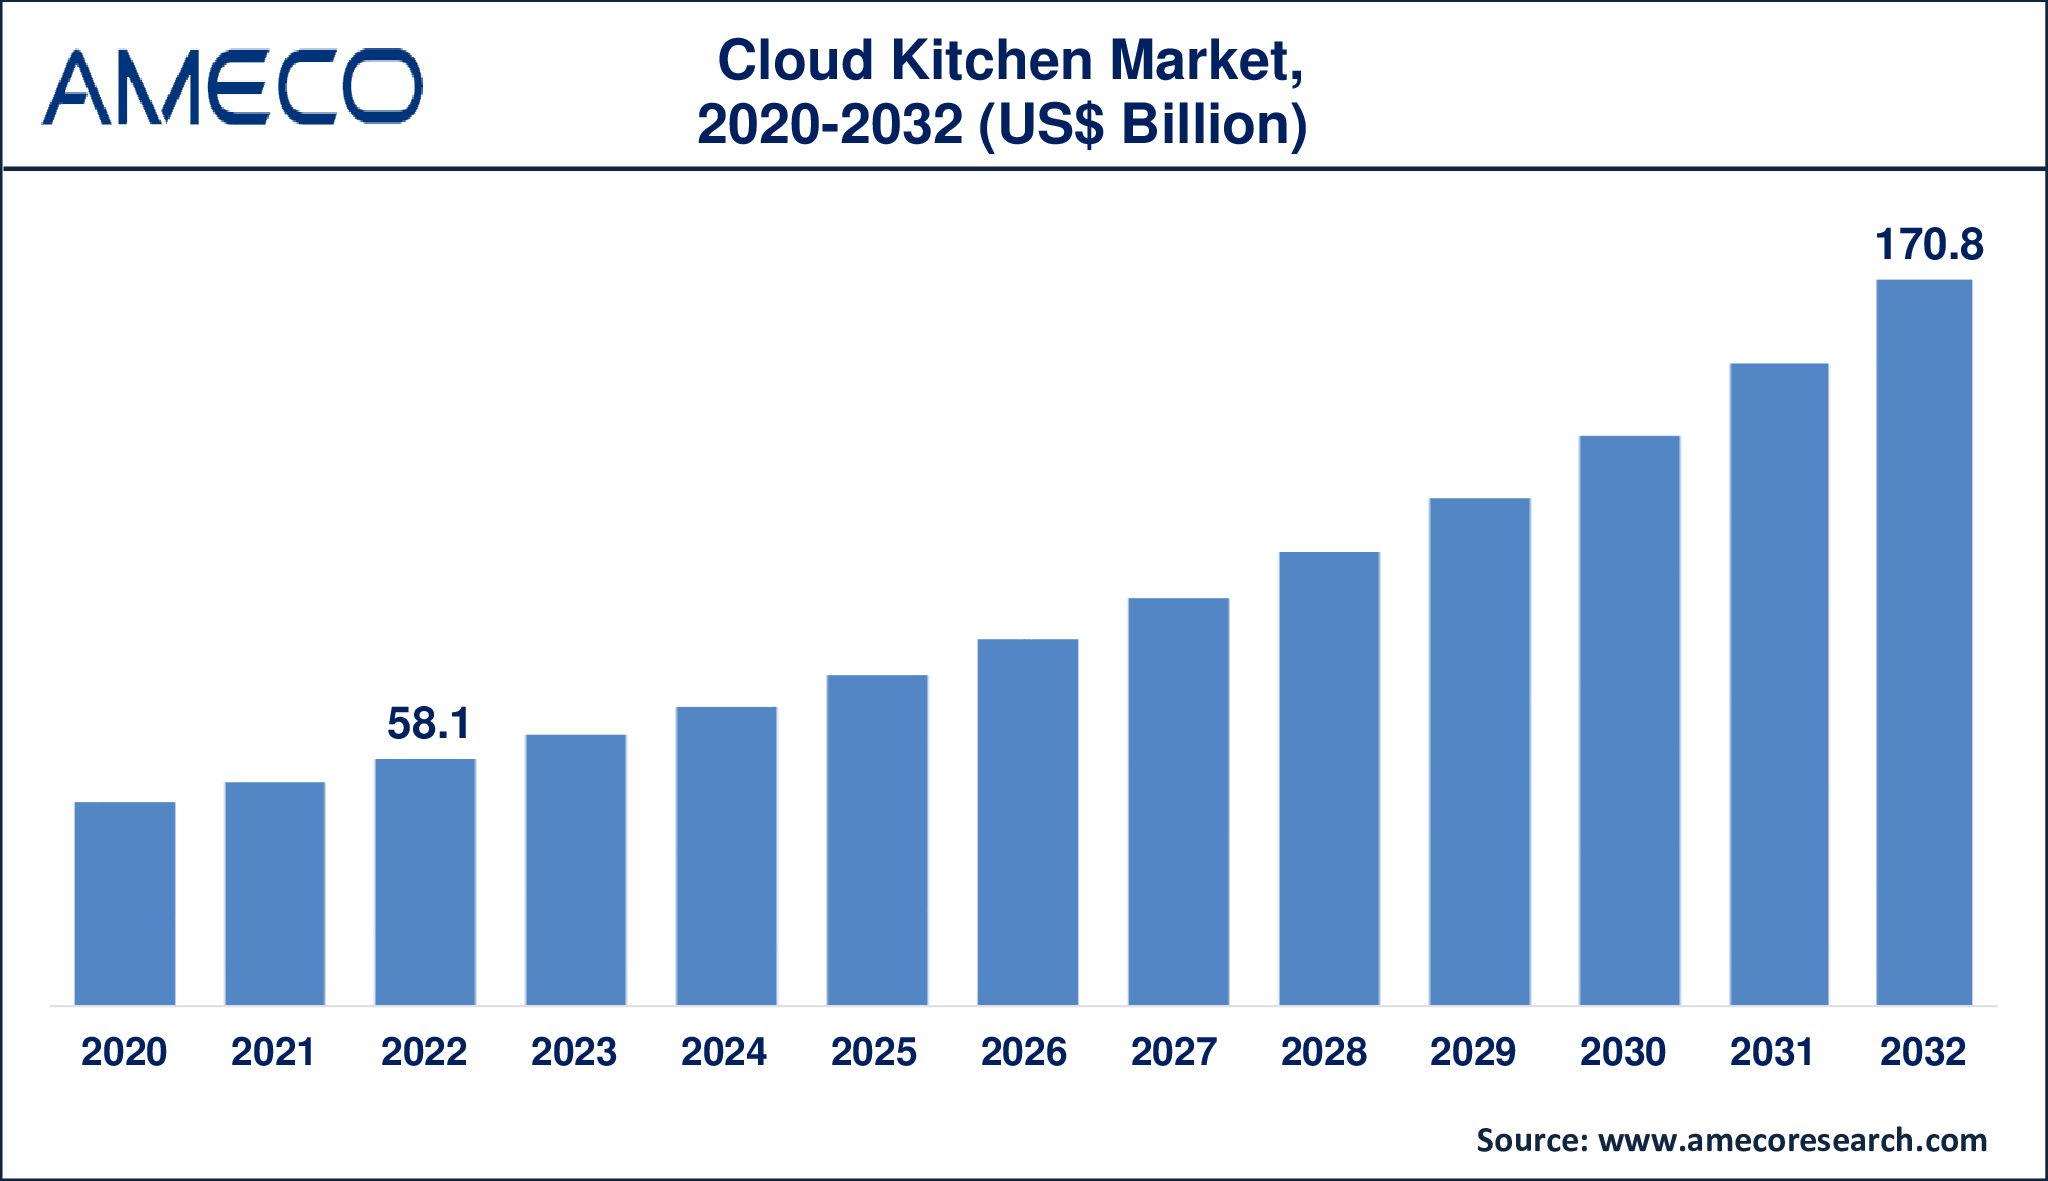 Cloud Kitchen Market Dynamics